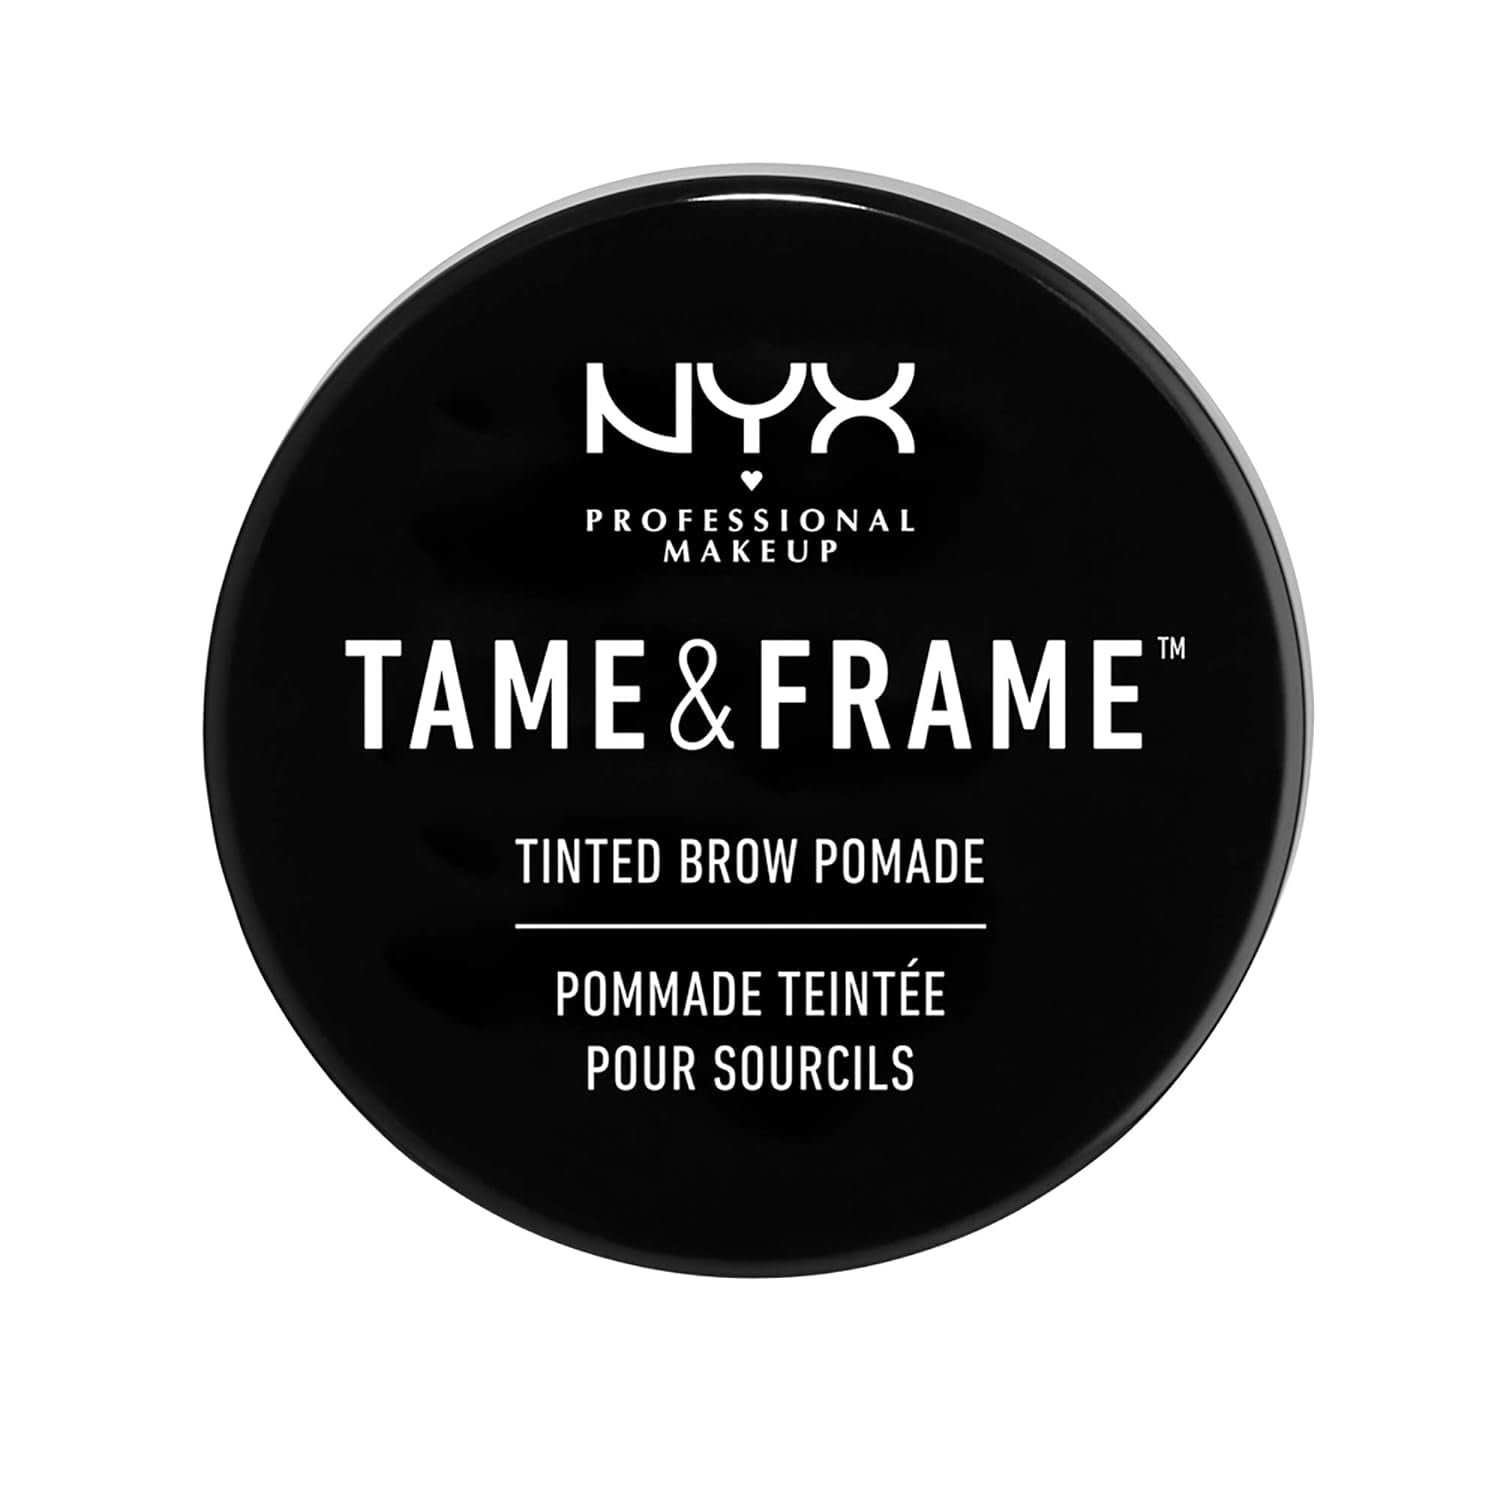 Professional Chocolate Tame Makeup Pomade, Brow & Frame NYX